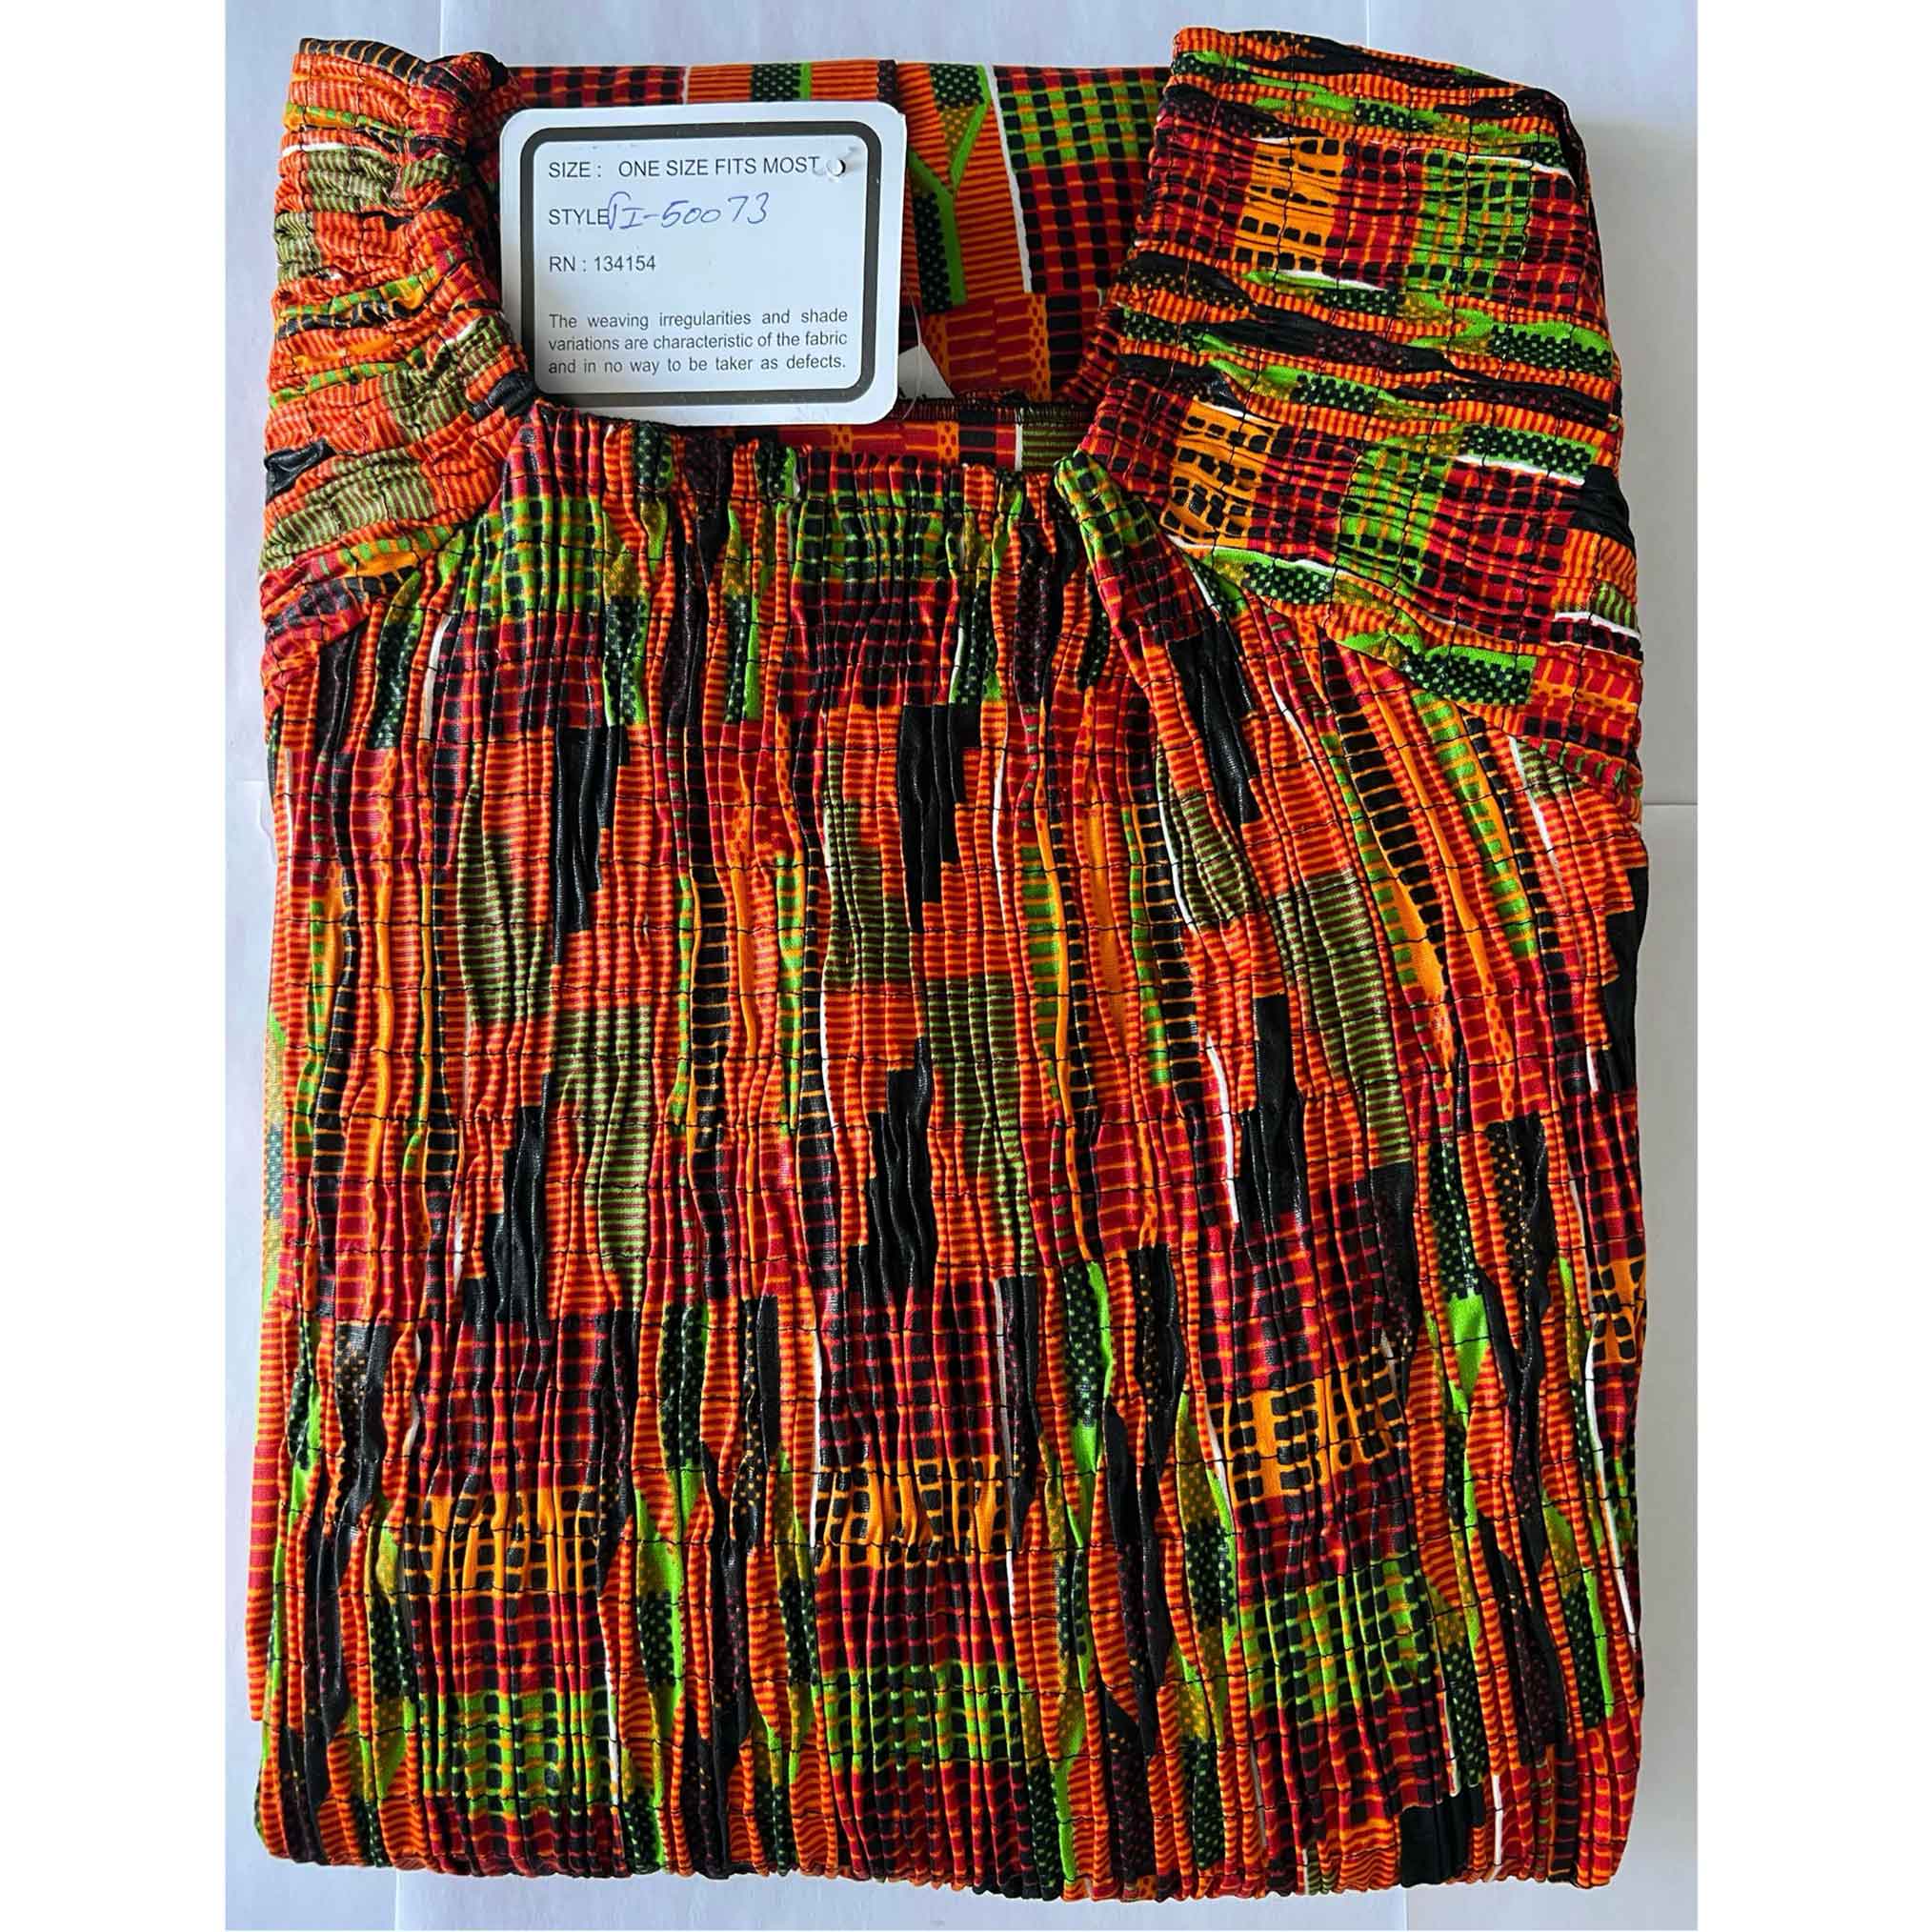 Women's Long Sleeve Smocking Short Dress -- FI-P50073